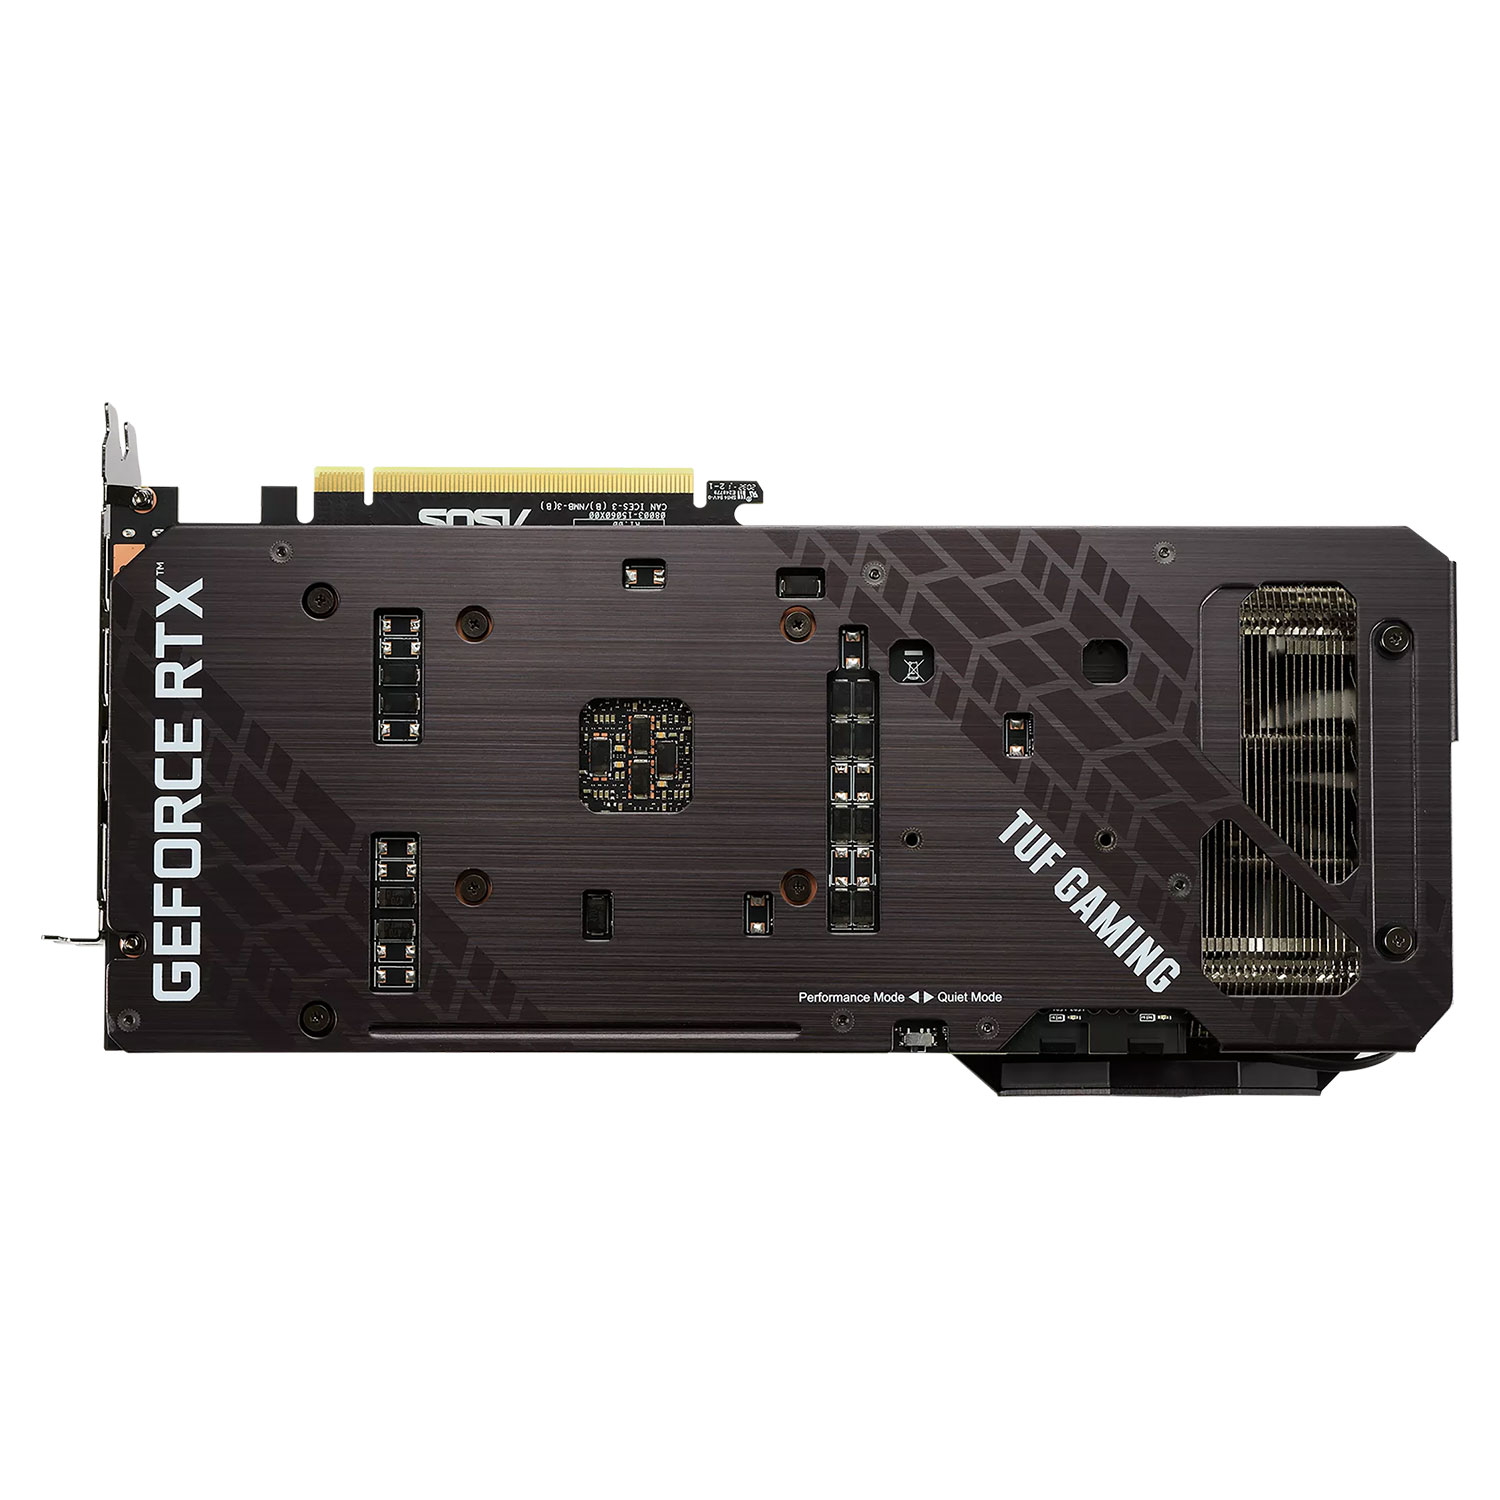 Placa de Vídeo Asus GeForce RTX 3070 8GB V2 Gaming LHR OC Edition - (TUF-RTX3070-O8G-V2-Gaming)
